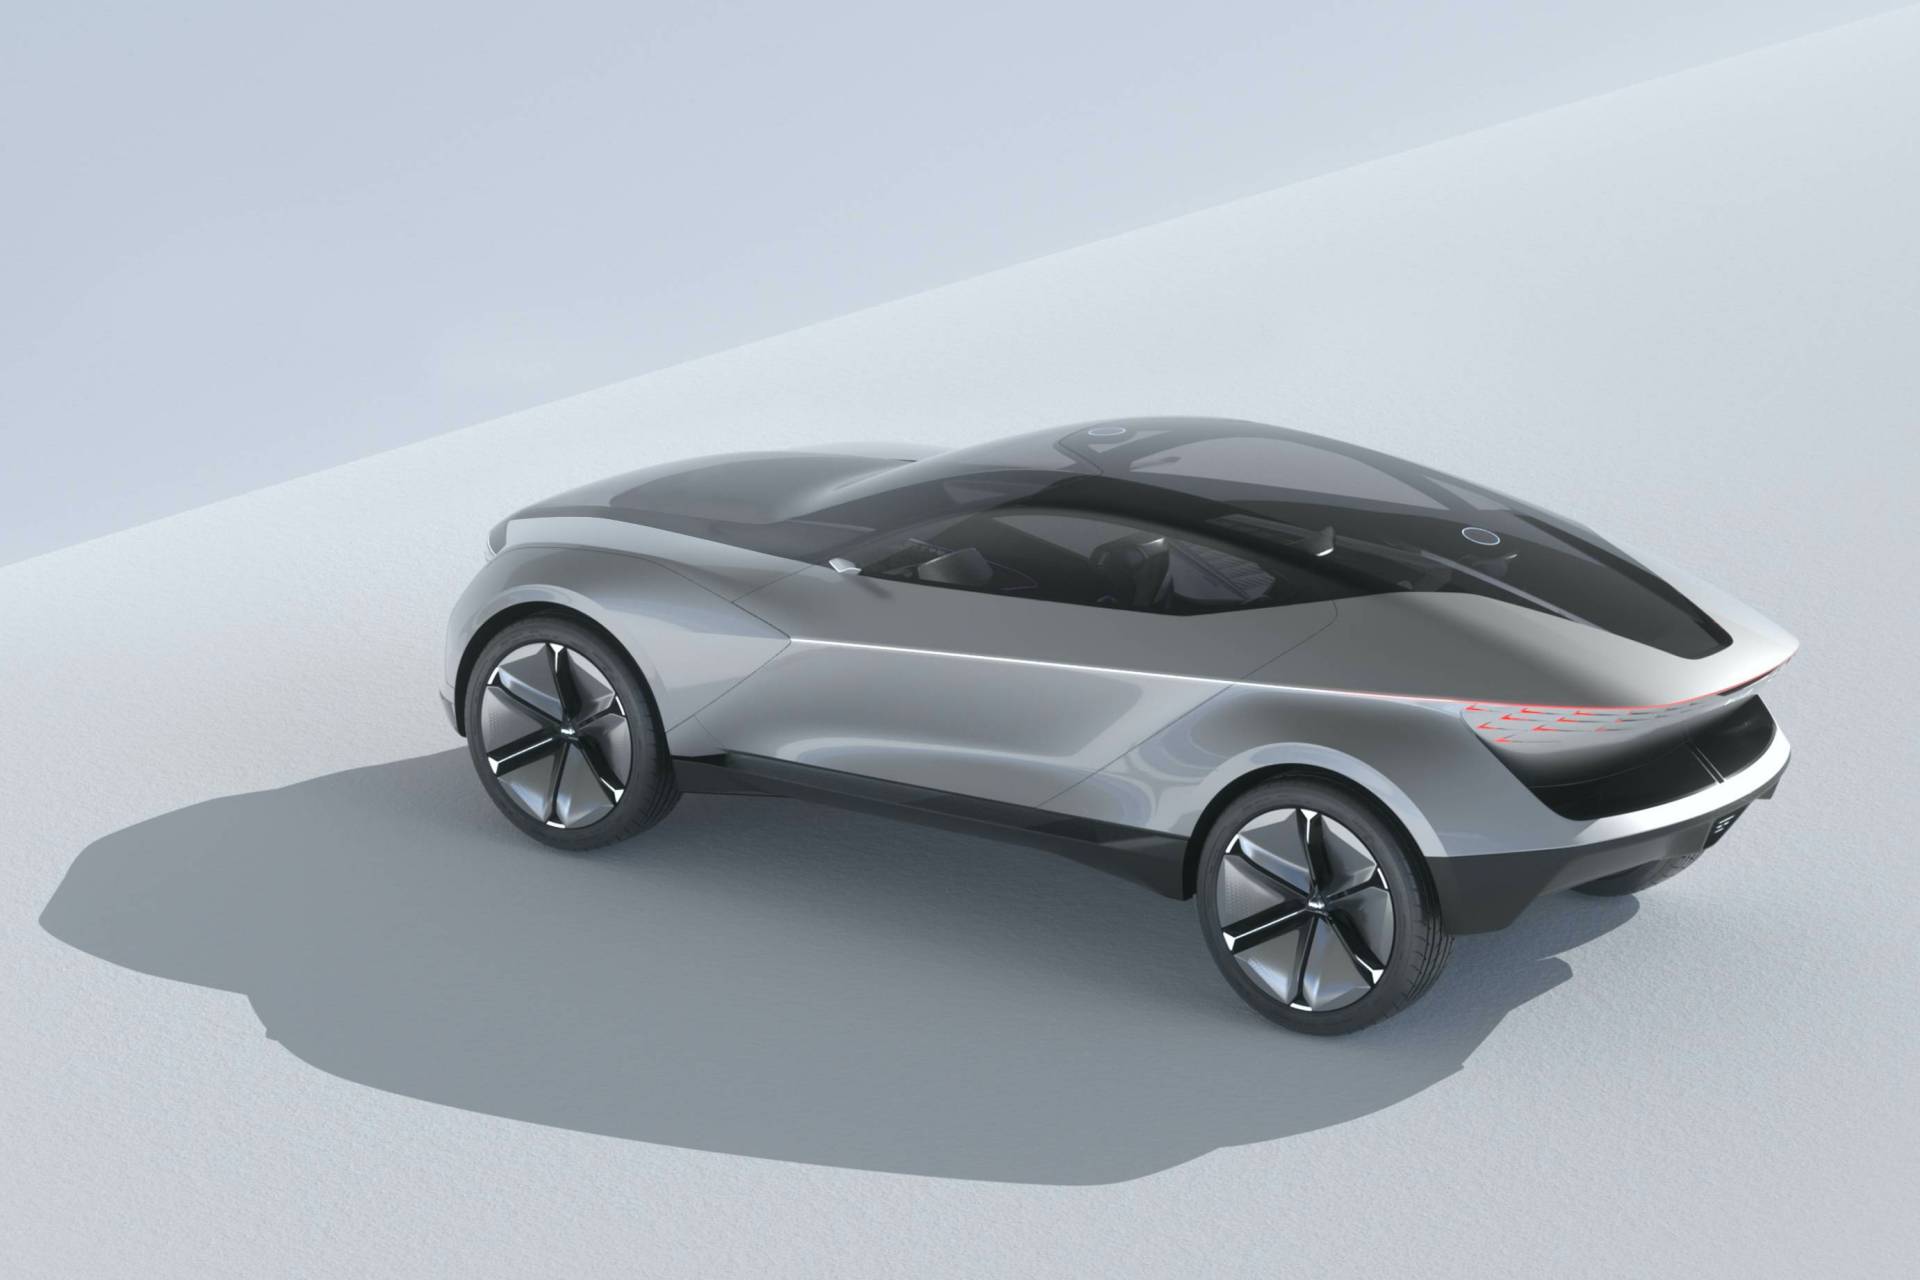 Flying Saucer-Shaped Kia Futuron Takes SUV Coupe Design to the Extreme